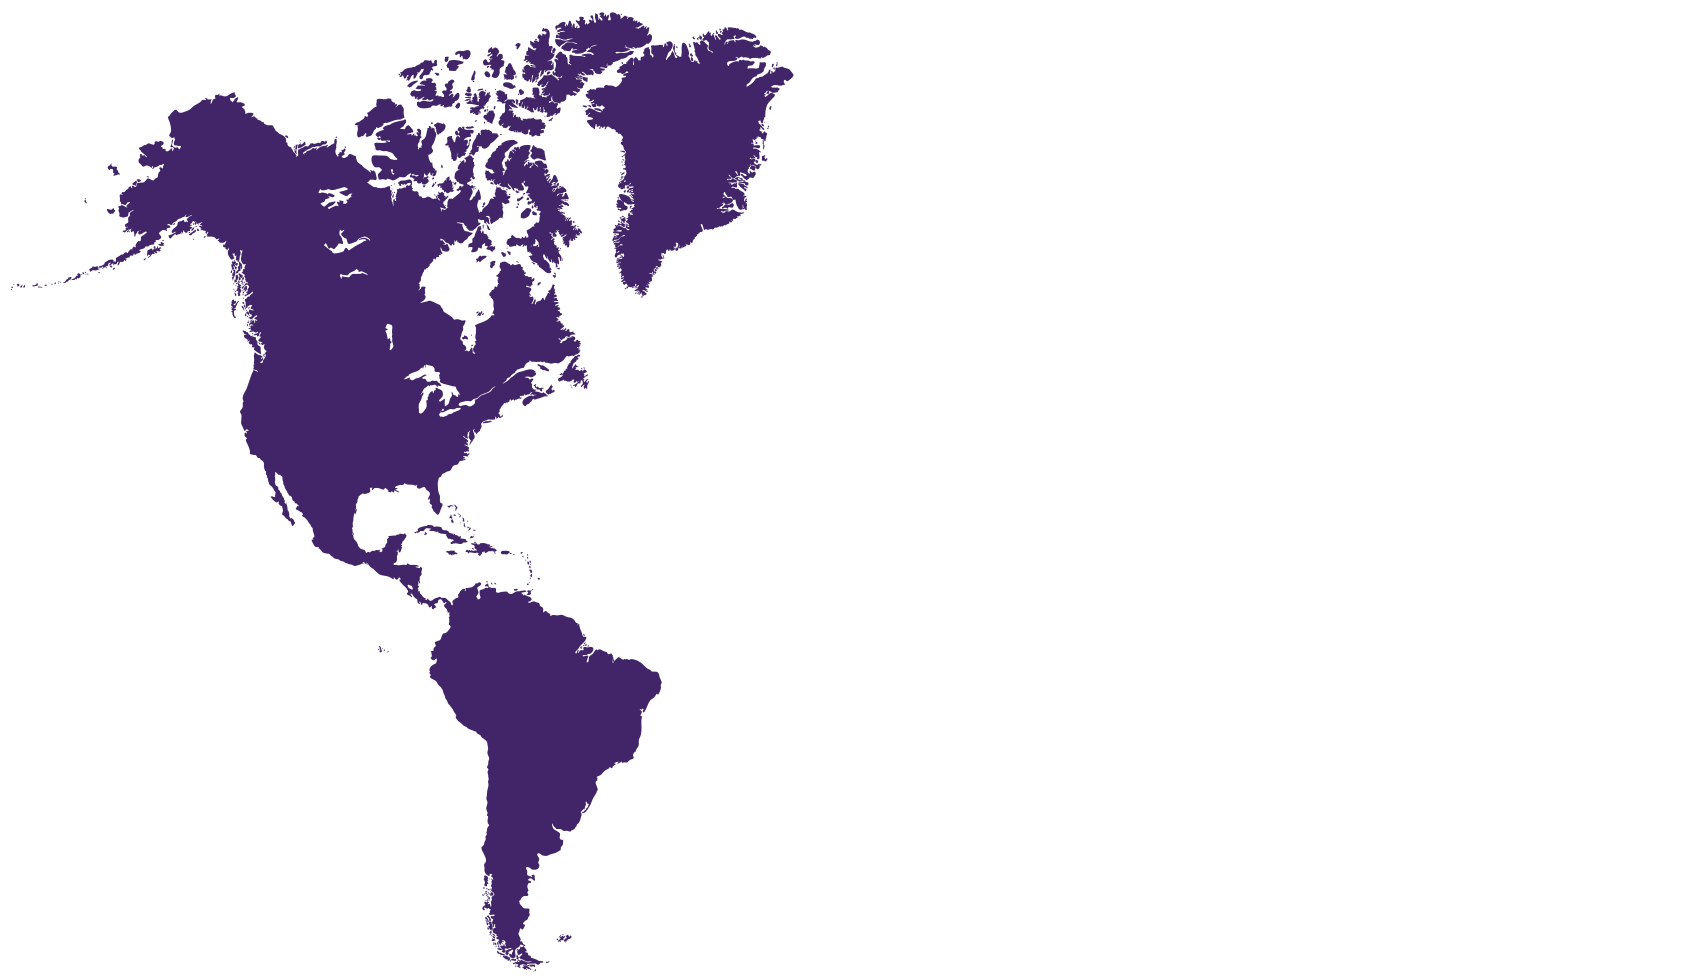 TBR Global - The Americas